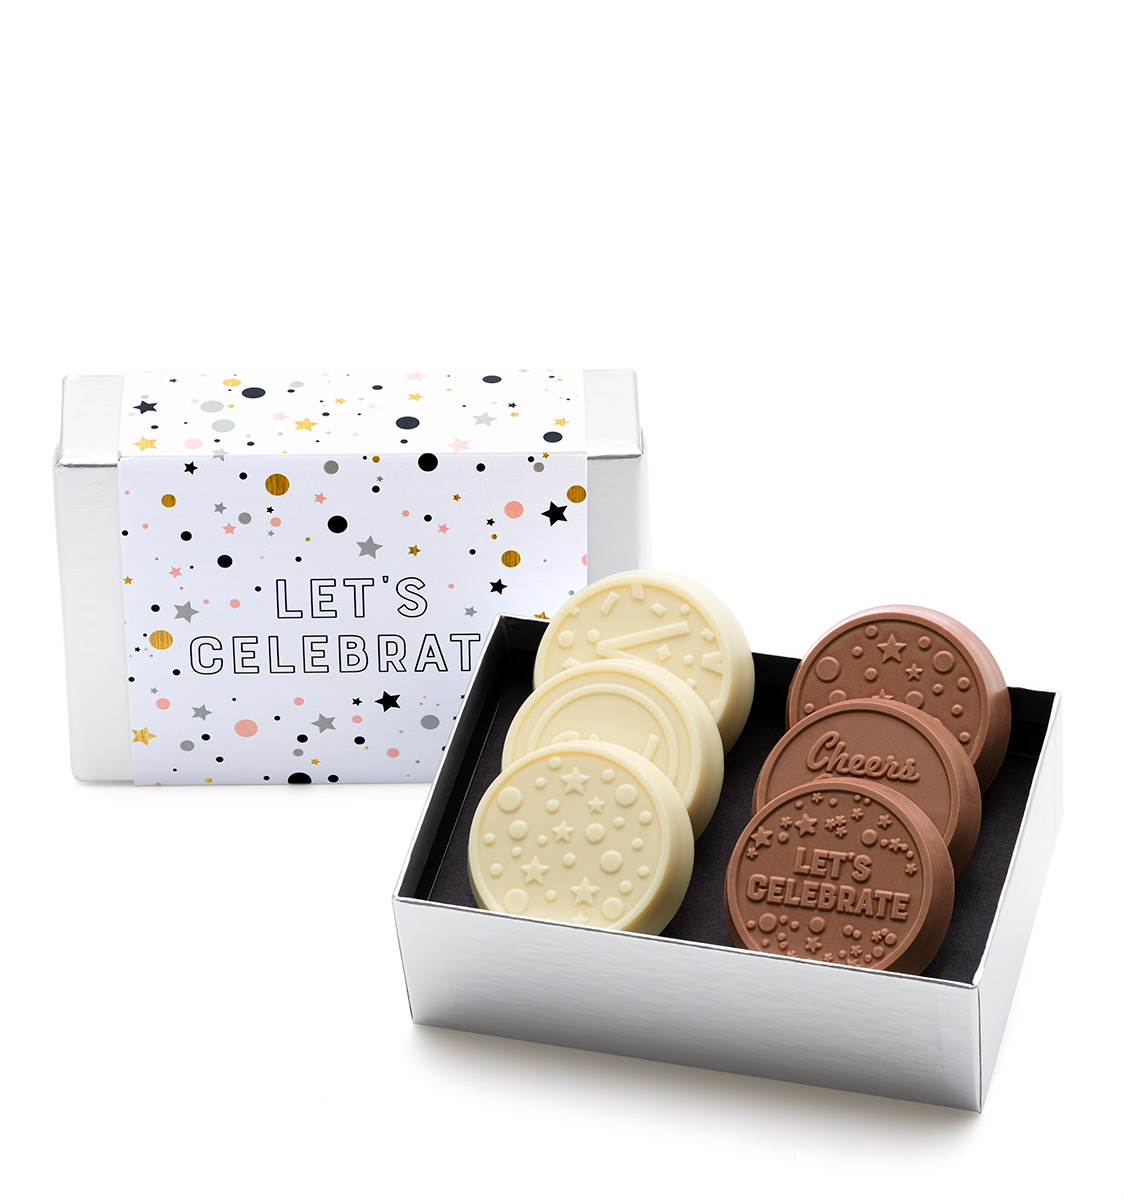 ready-gift-chocolate-SHX206005T-engraved-chocolate-oreos-celebration